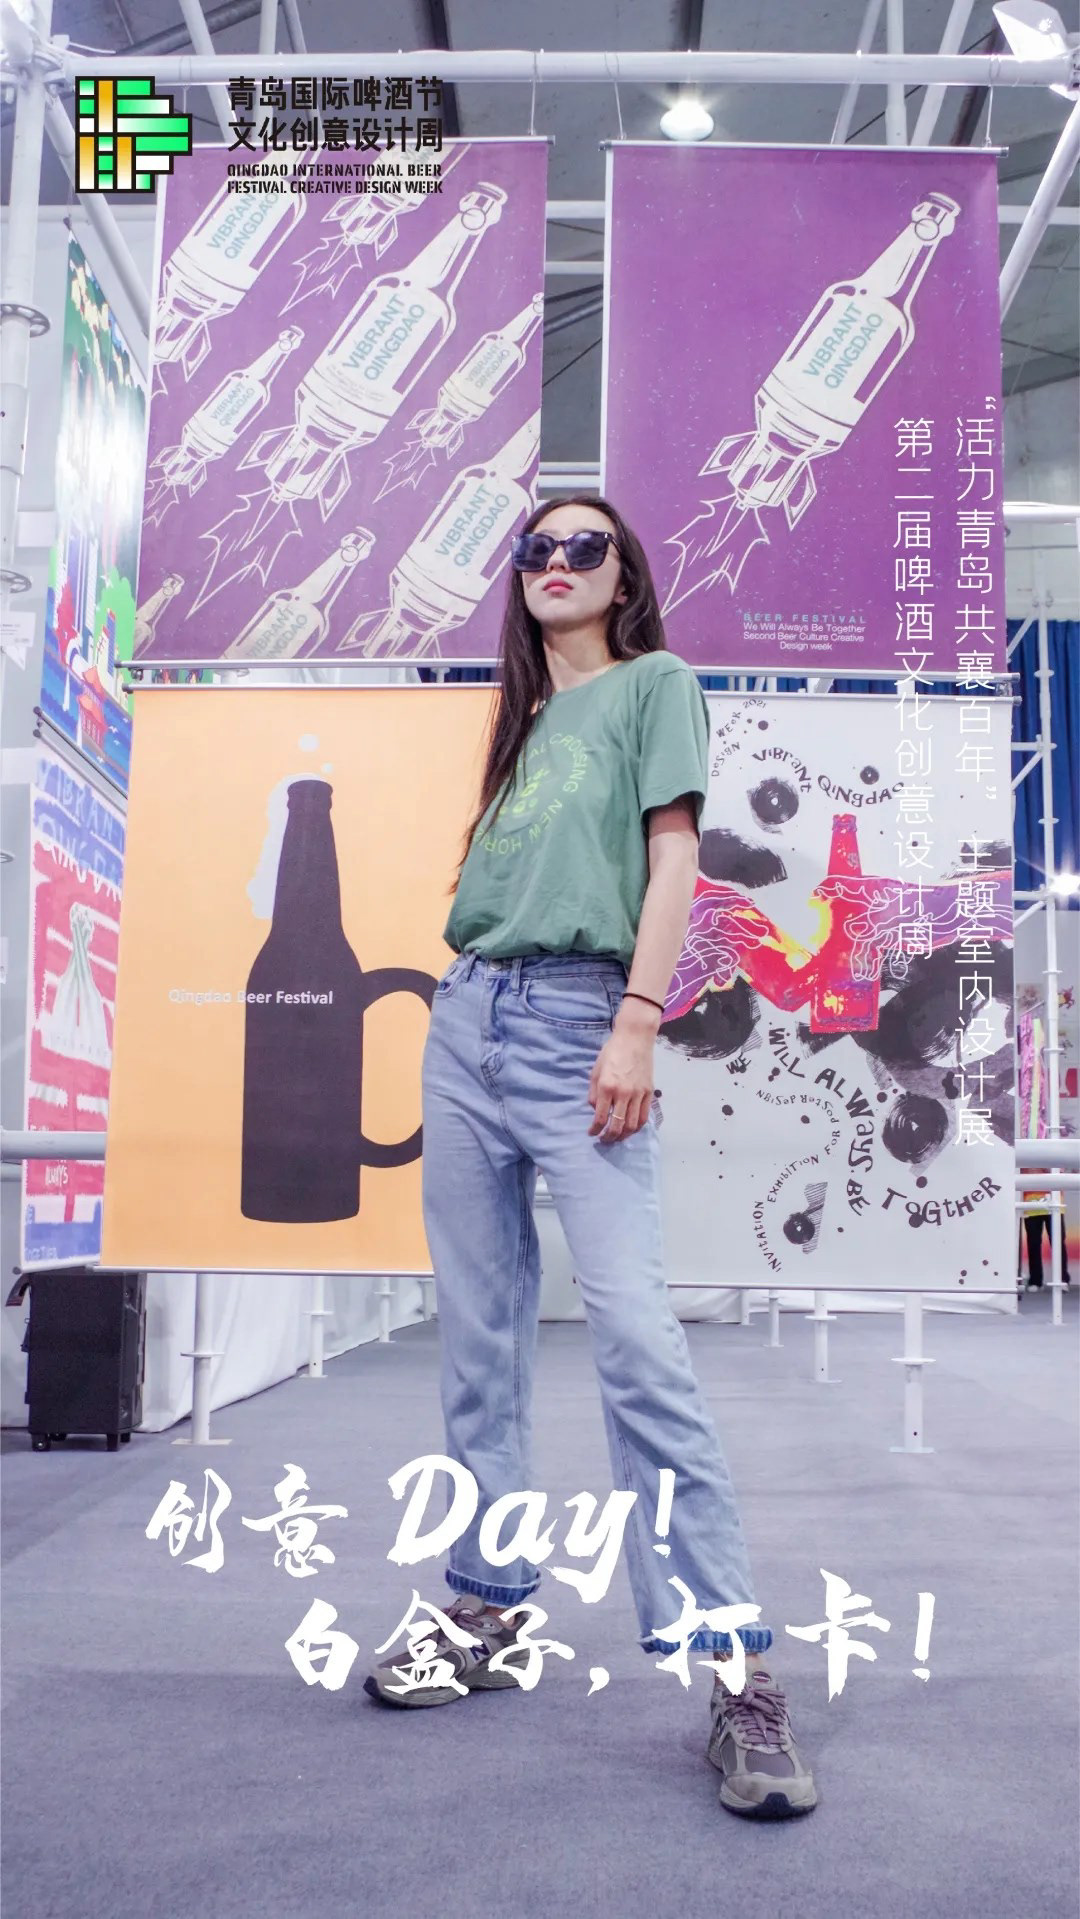 beer beerfestival beerfestivalposter china Exhibition  m210297 Modernart Poster Design posterexhibition Qingdao